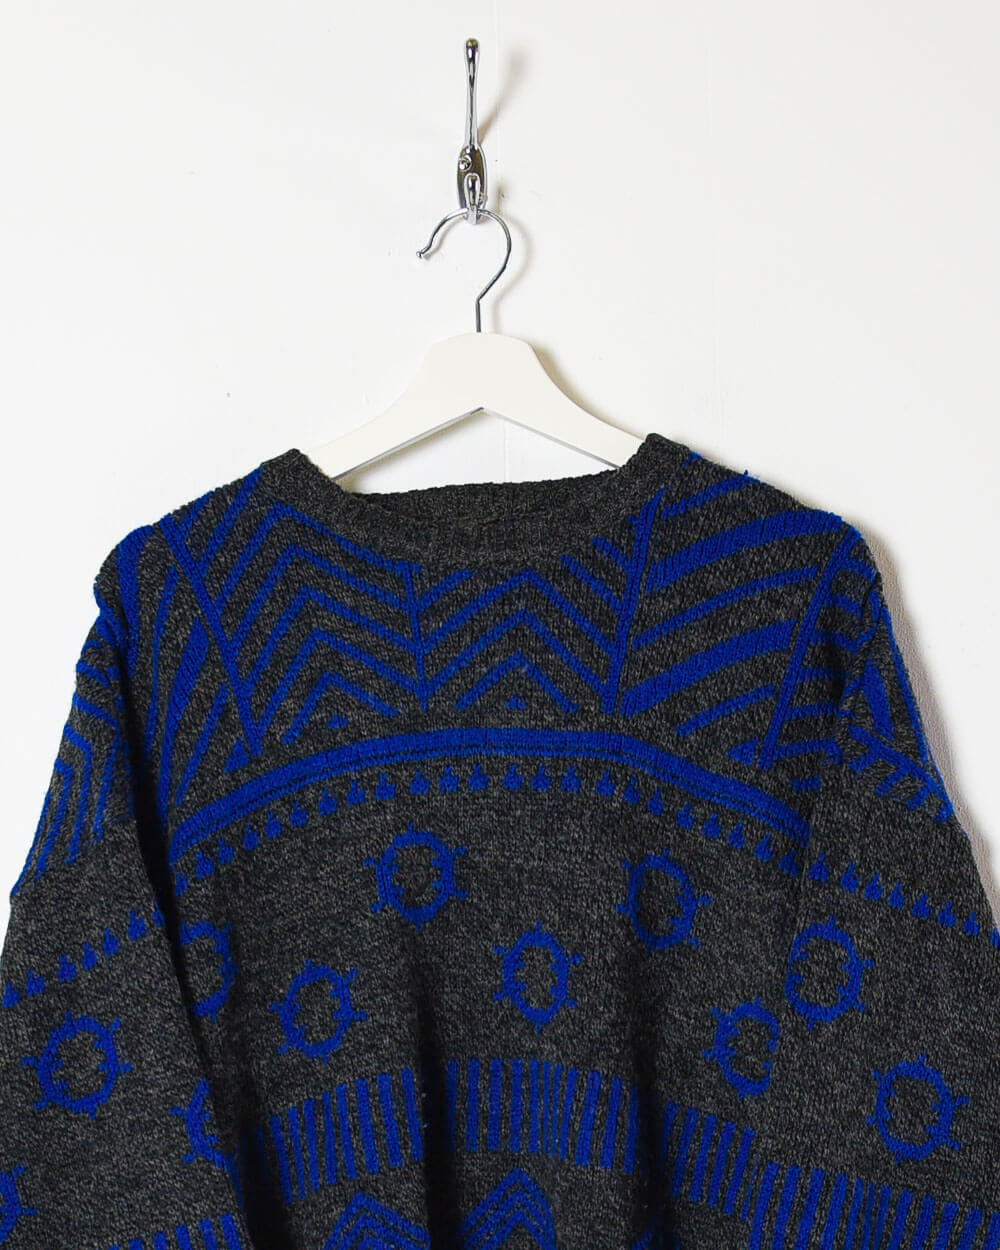 Neutral Vintage Knitted Sweatshirt - Medium